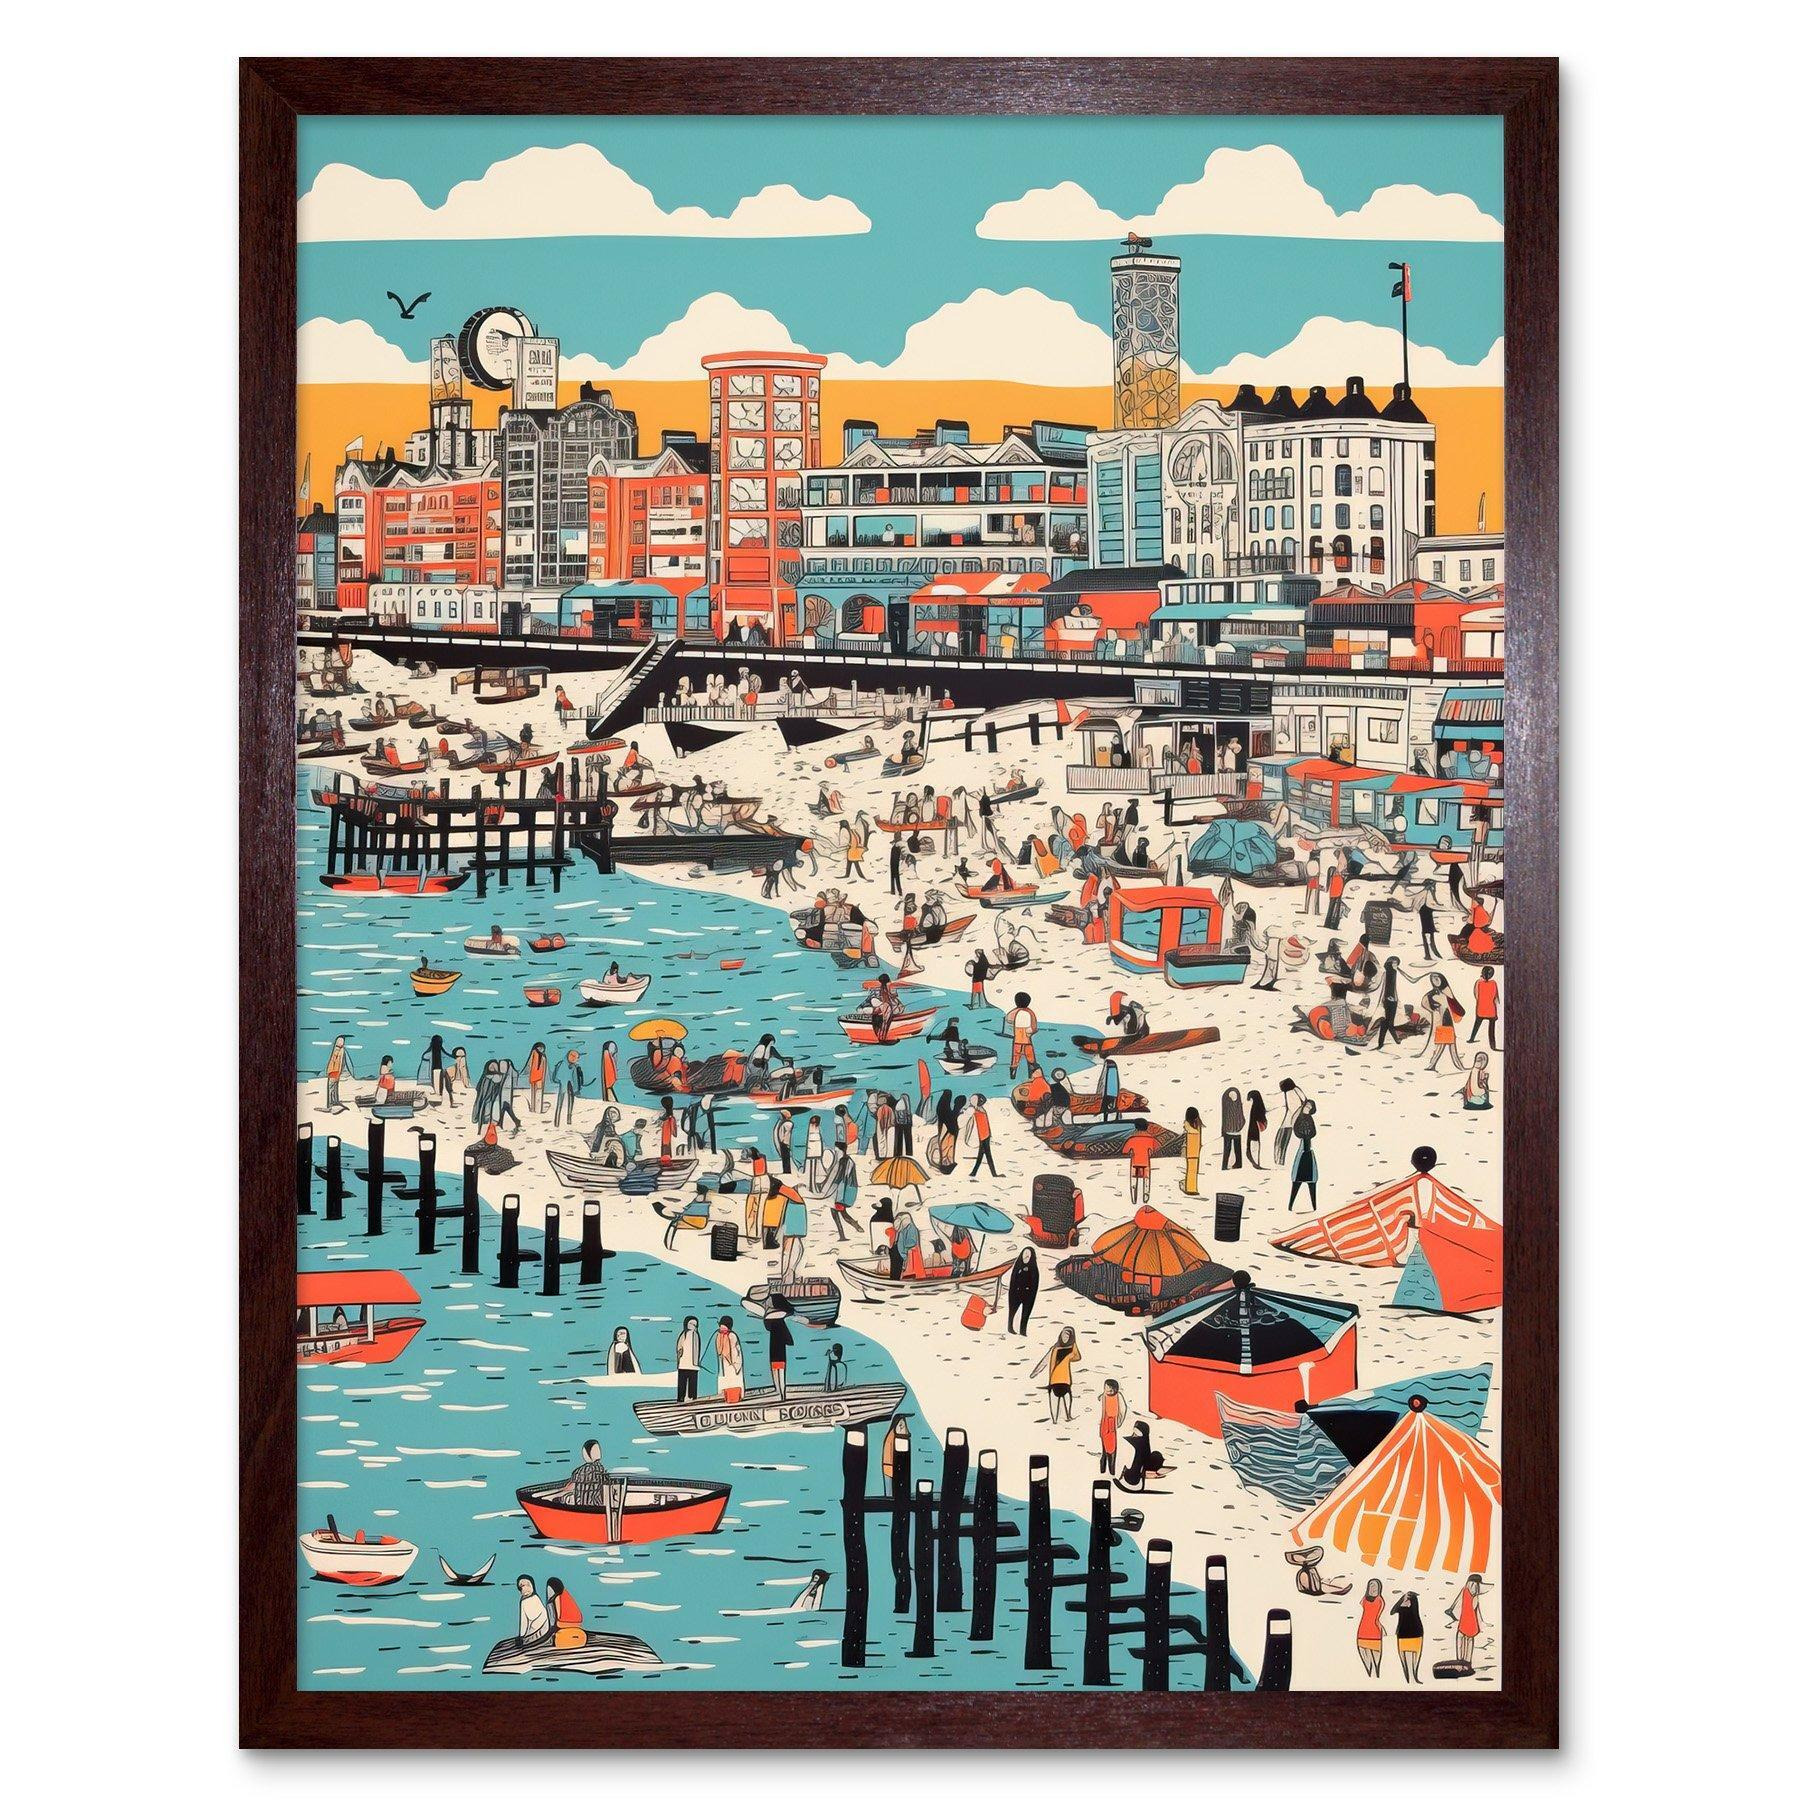 Brighton Beach Warm Summer Day Colourful Scene Art Print Framed Poster Wall Decor 12x16 inch - image 1